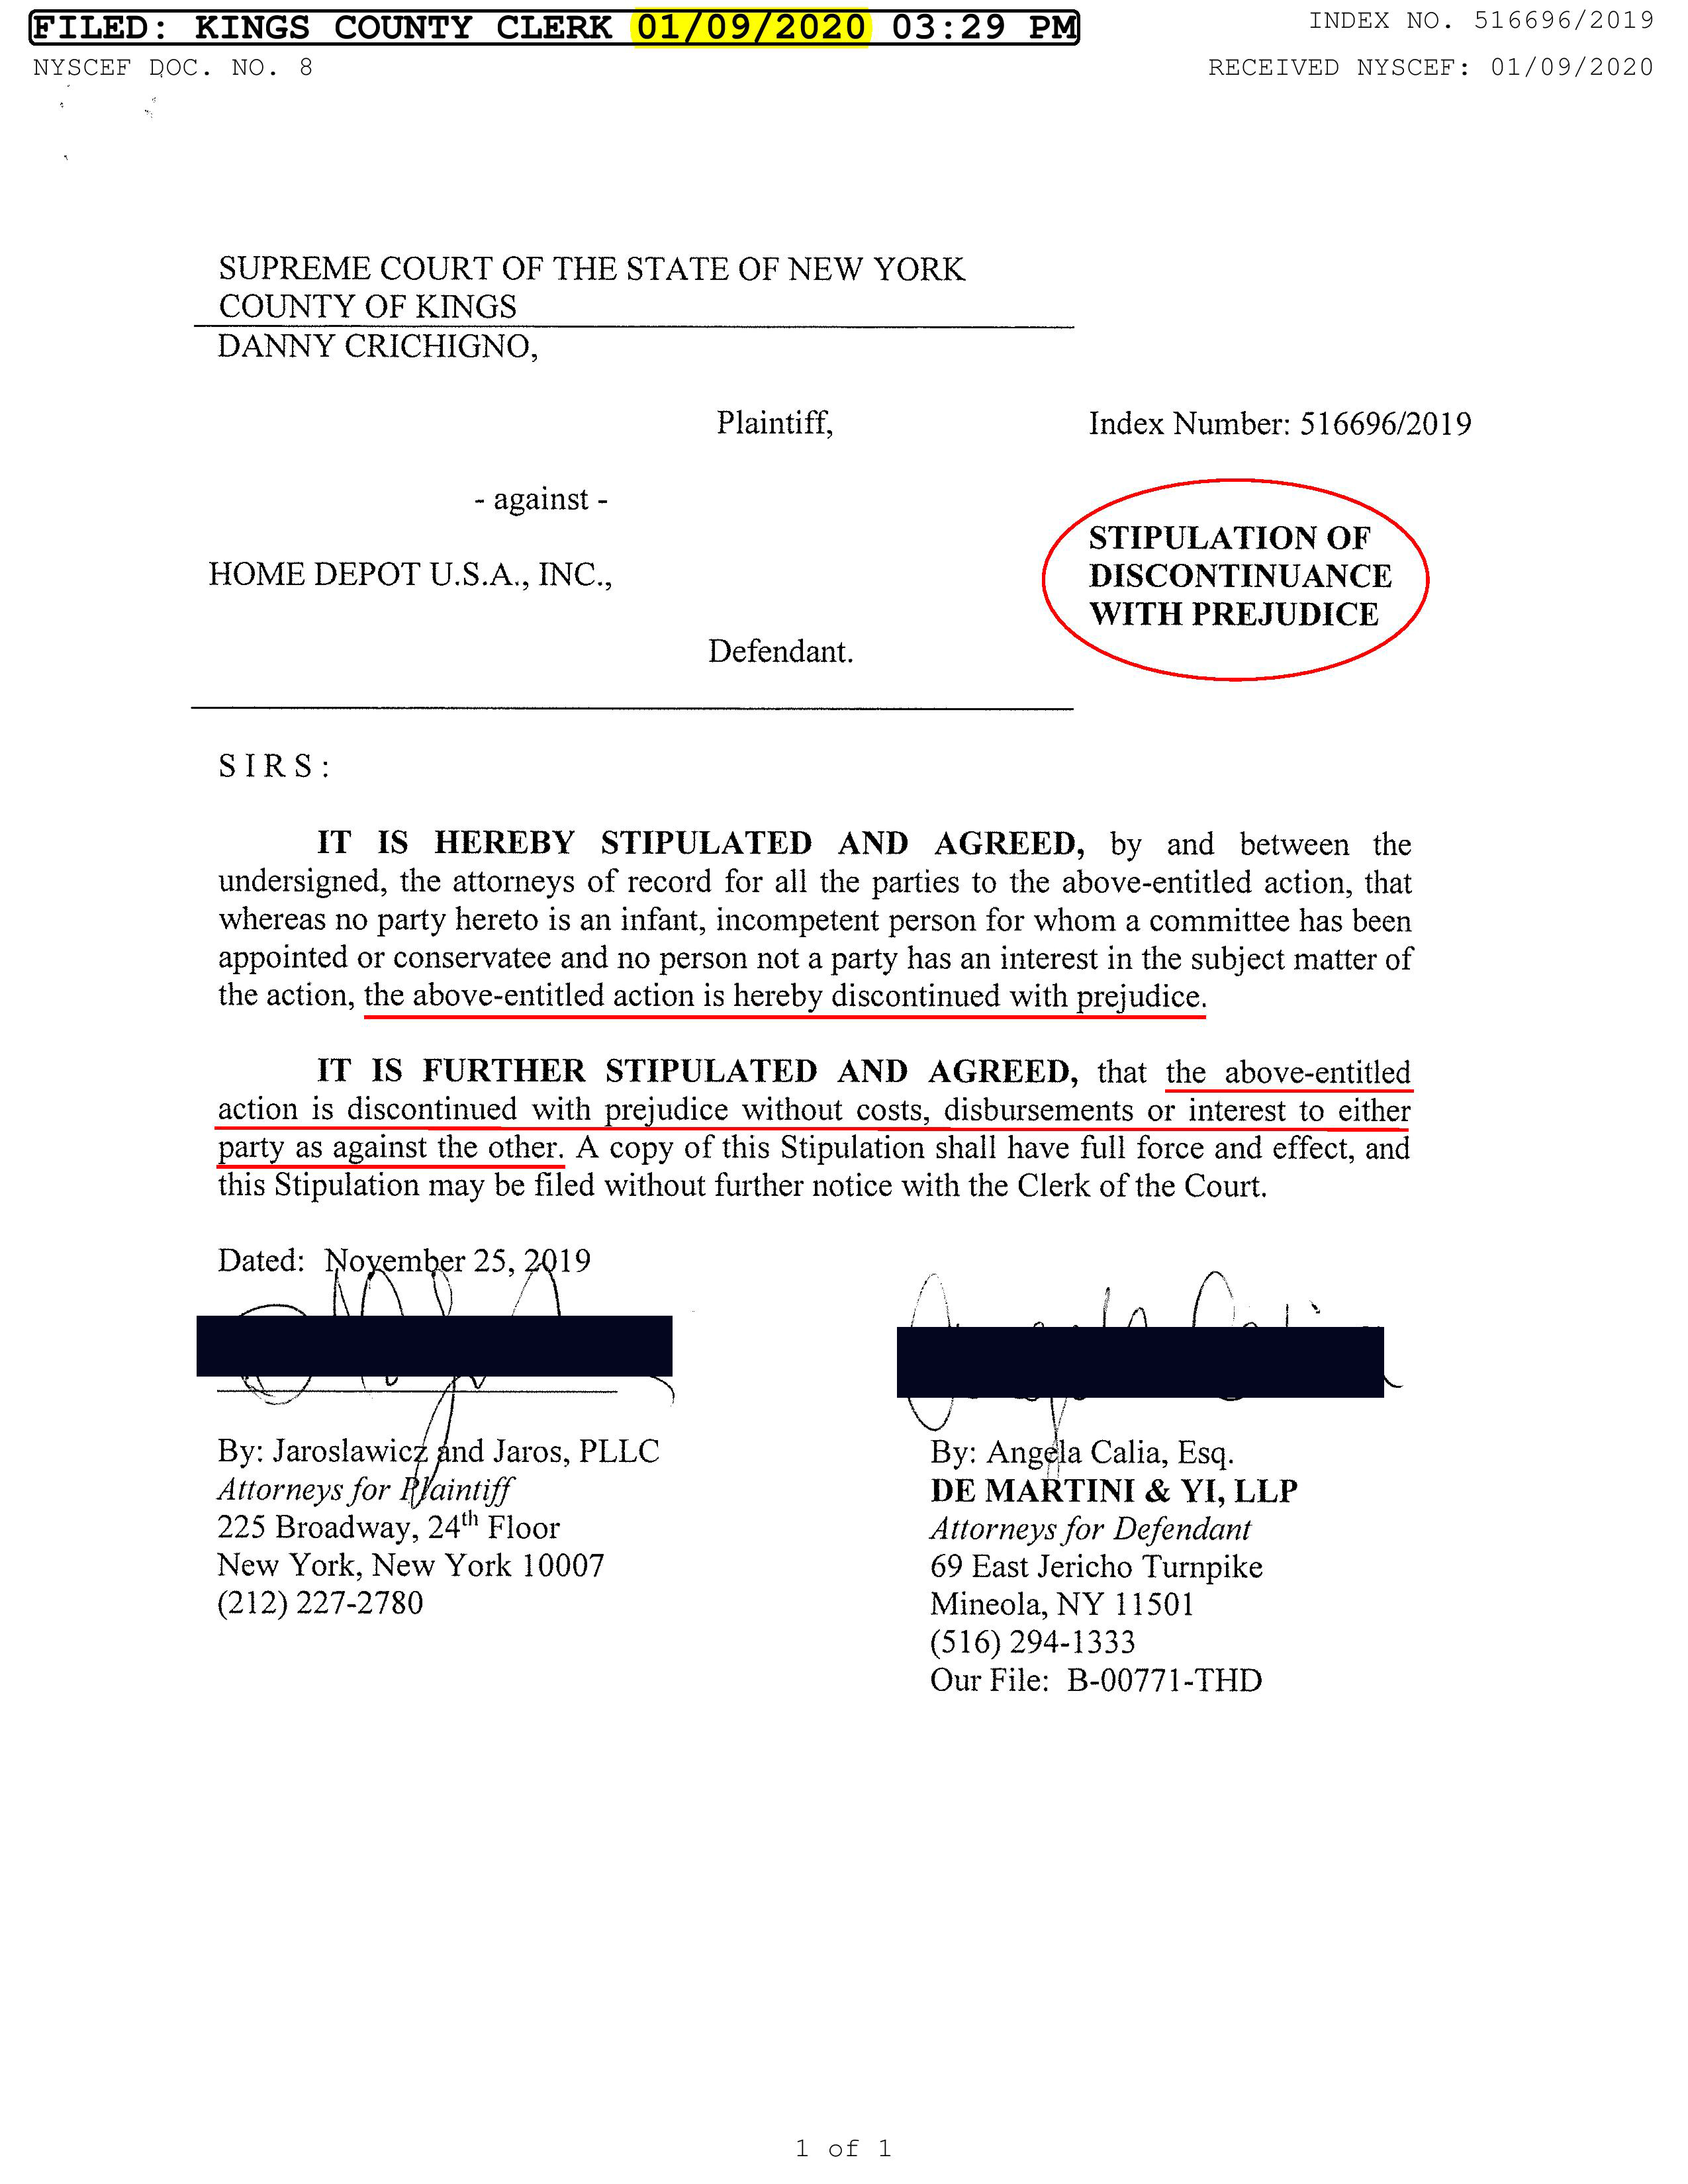 Danny Crichigno extortion dismissed-NYS court